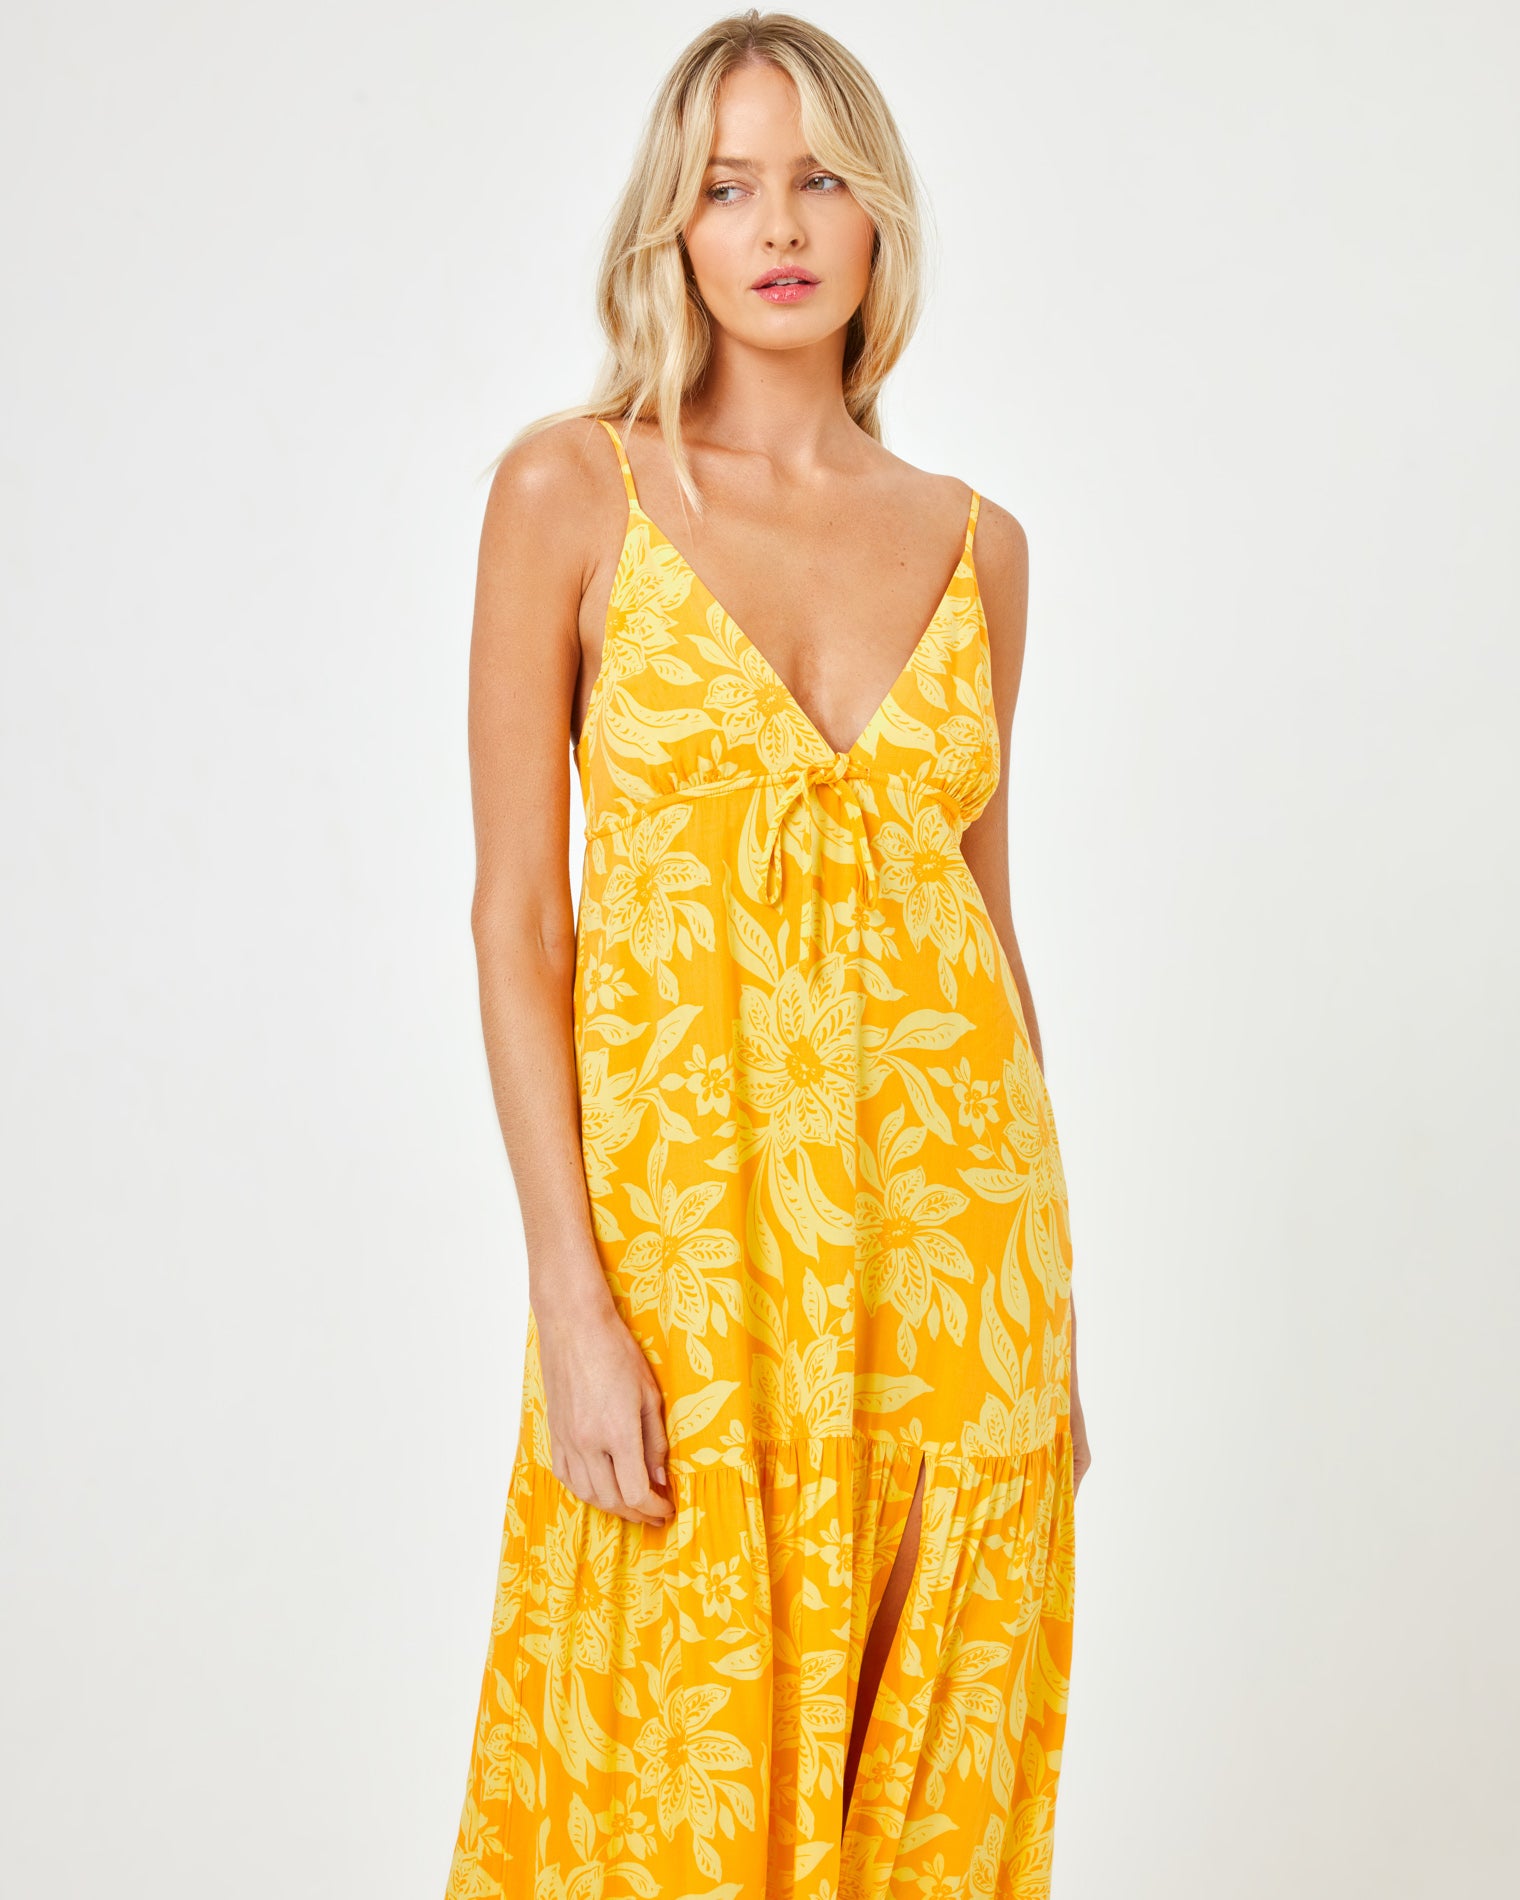 Printed Victoria Dress - Golden Hour Blooms Golden Hour Blooms | Model: Lura (size: S)